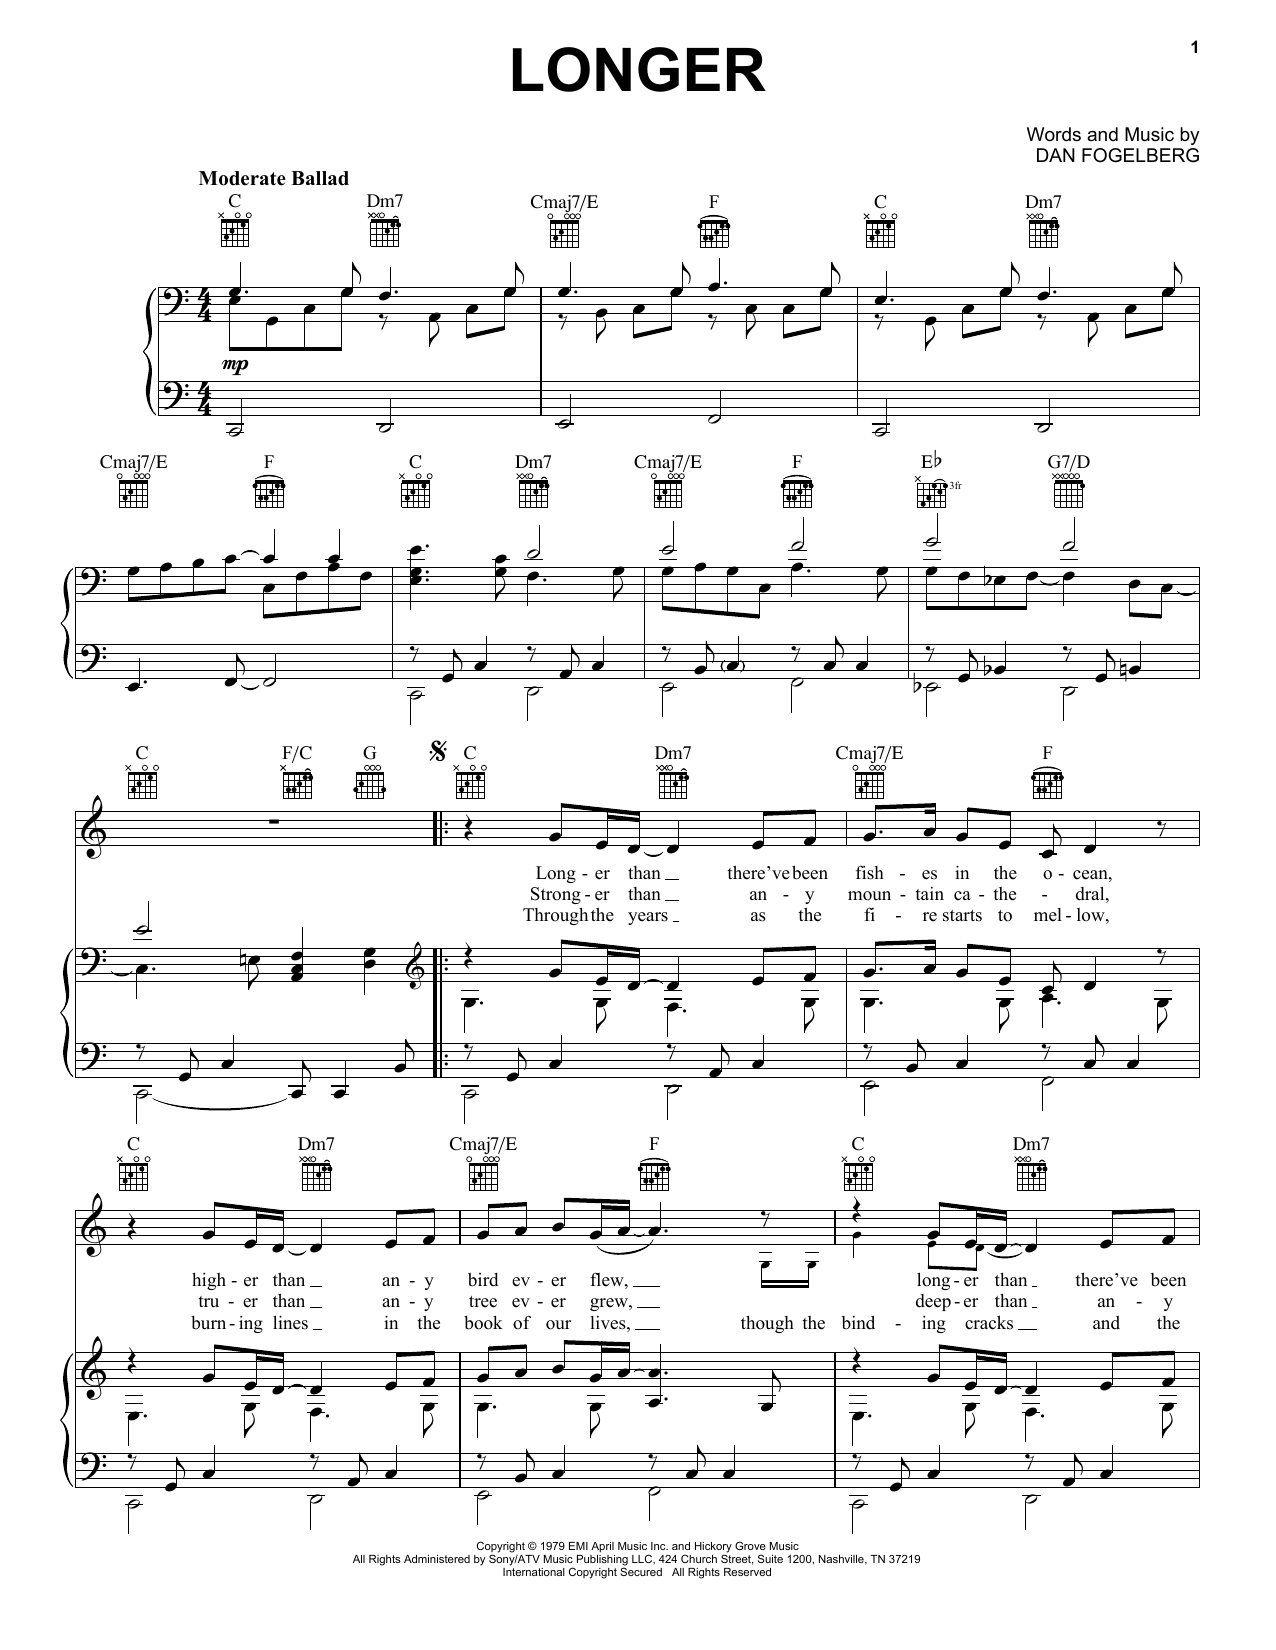 Download Dan Fogelberg Longer Sheet Music and learn how to play Baritone Ukulele PDF digital score in minutes